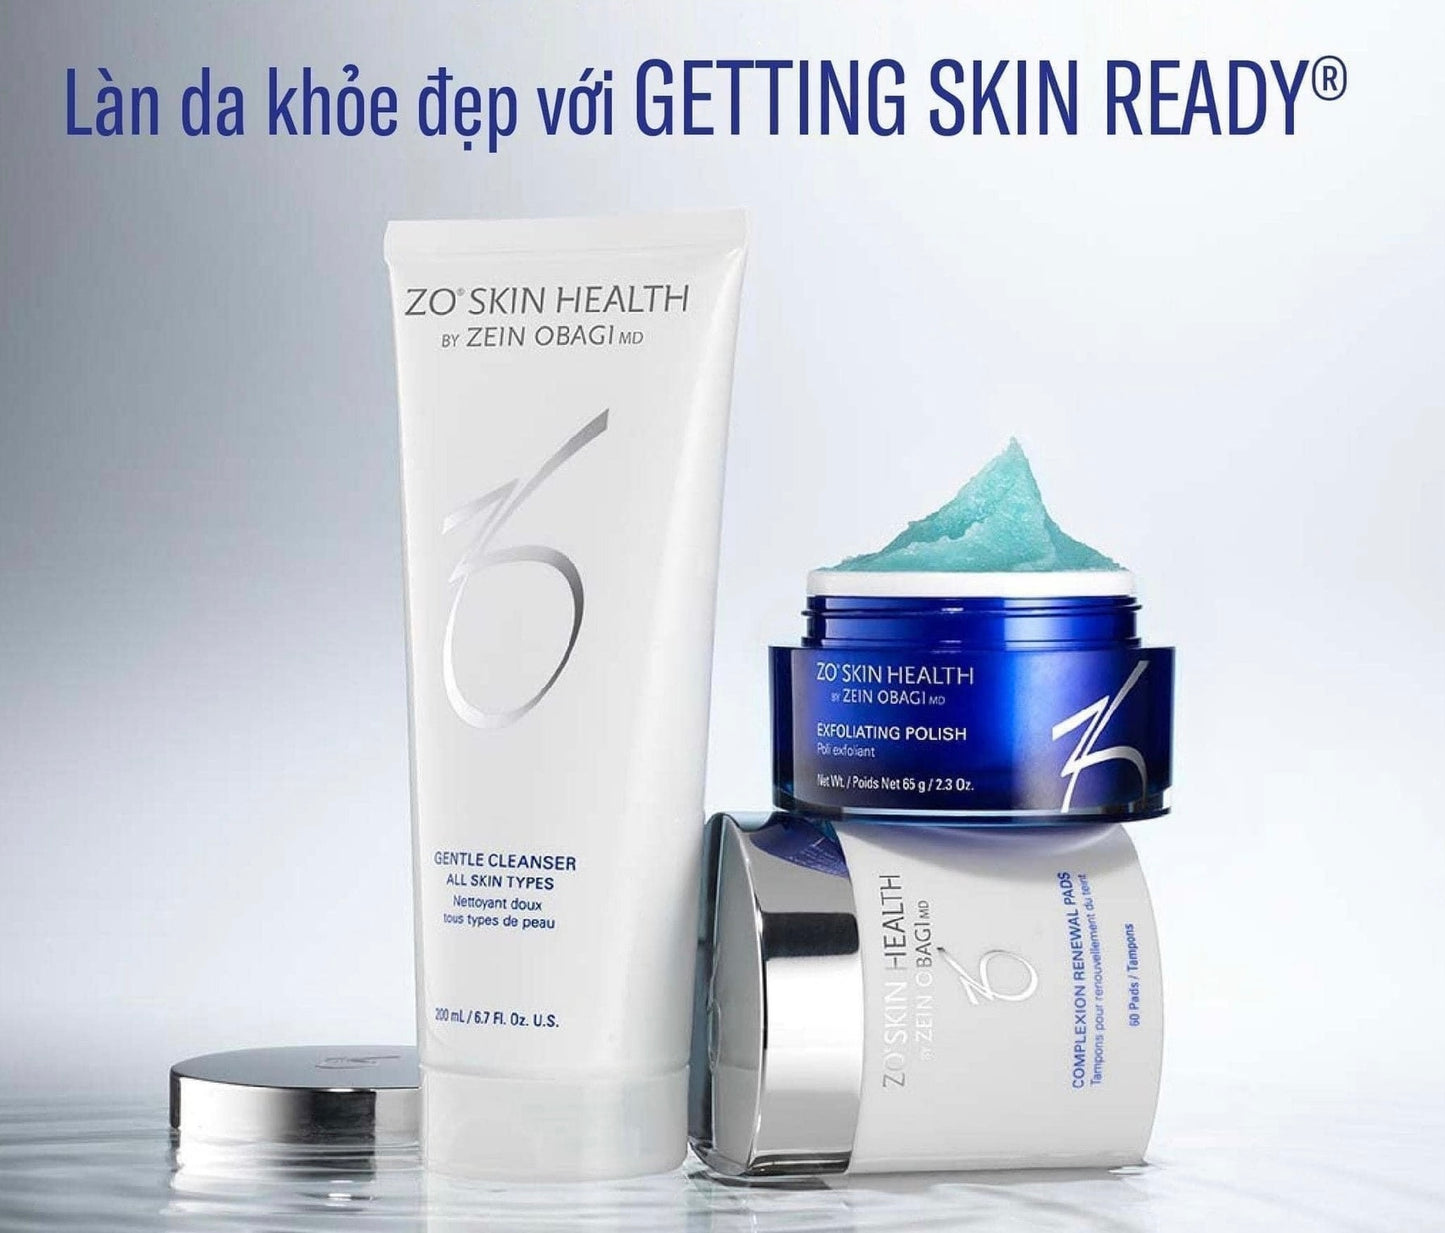 Set 3 sản phẩm làm sạch da ZO SKIN HEALTH Getting Skin Ready